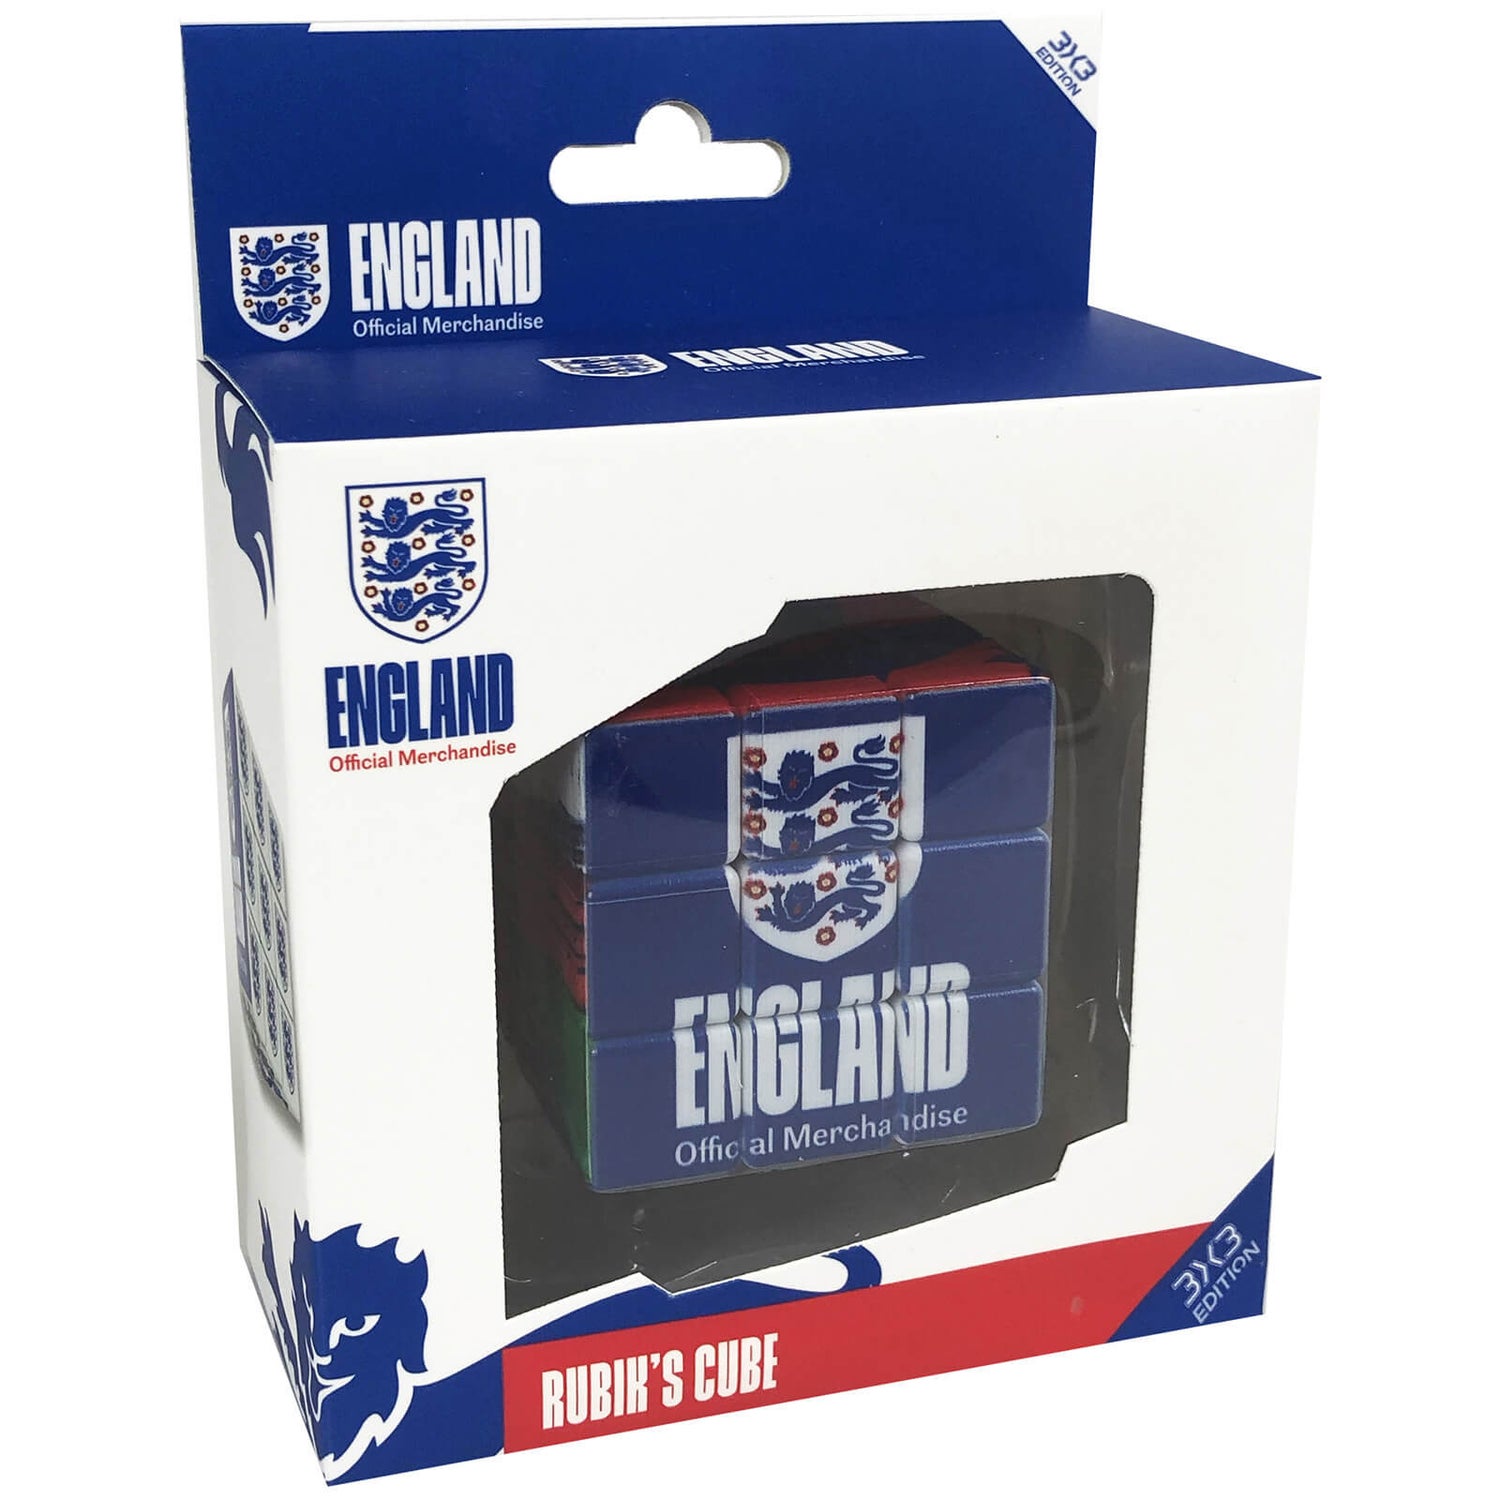 Rubiks Cube - England Edition